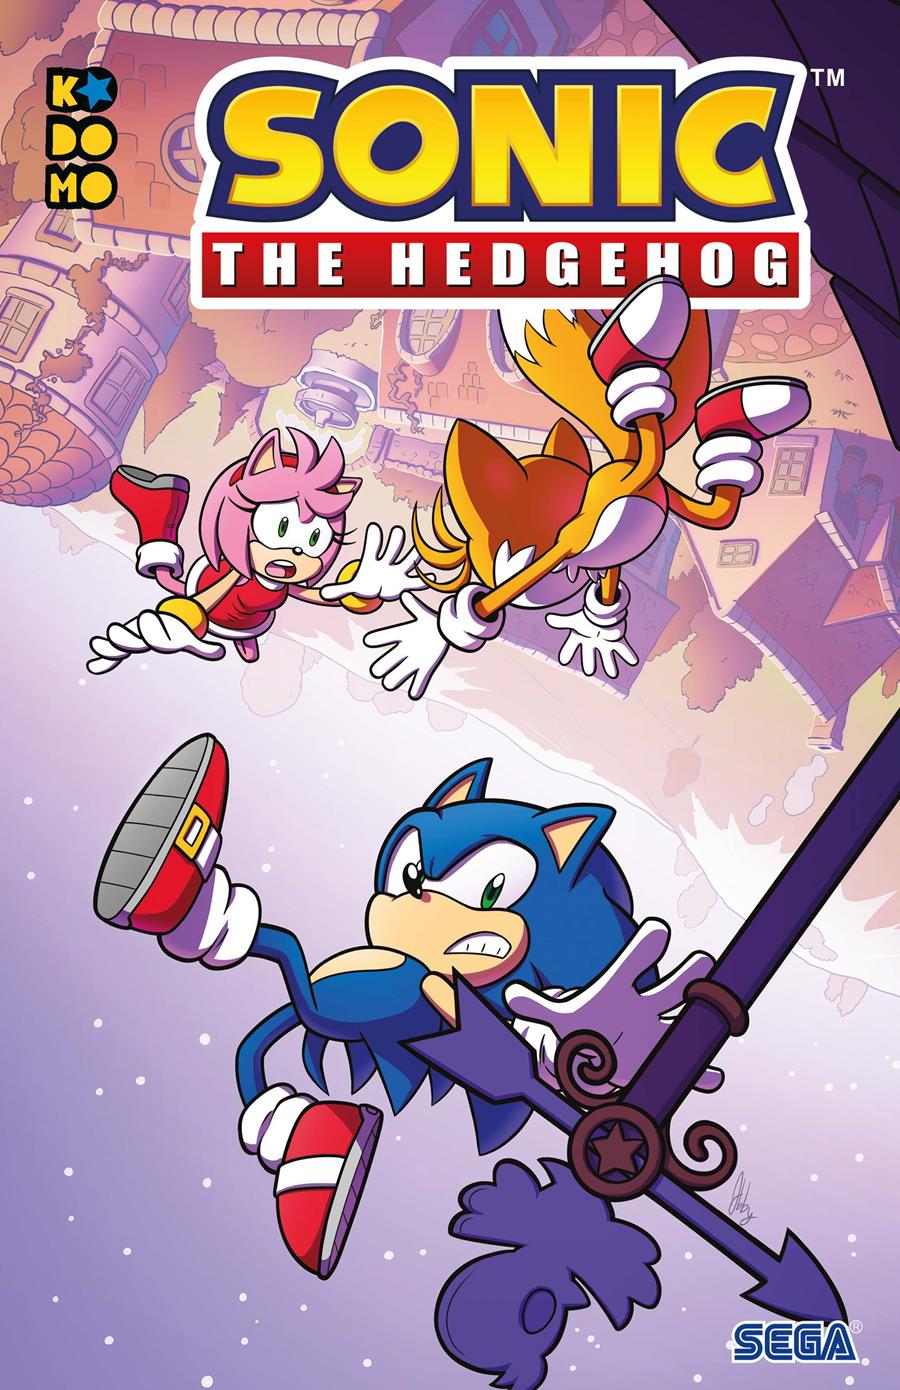 Sonic The Hedgehog núm. 39 | N1022-ECC60 | Bracardy Curry / Evan Stanley / Evan Stanley | Terra de Còmic - Tu tienda de cómics online especializada en cómics, manga y merchandising